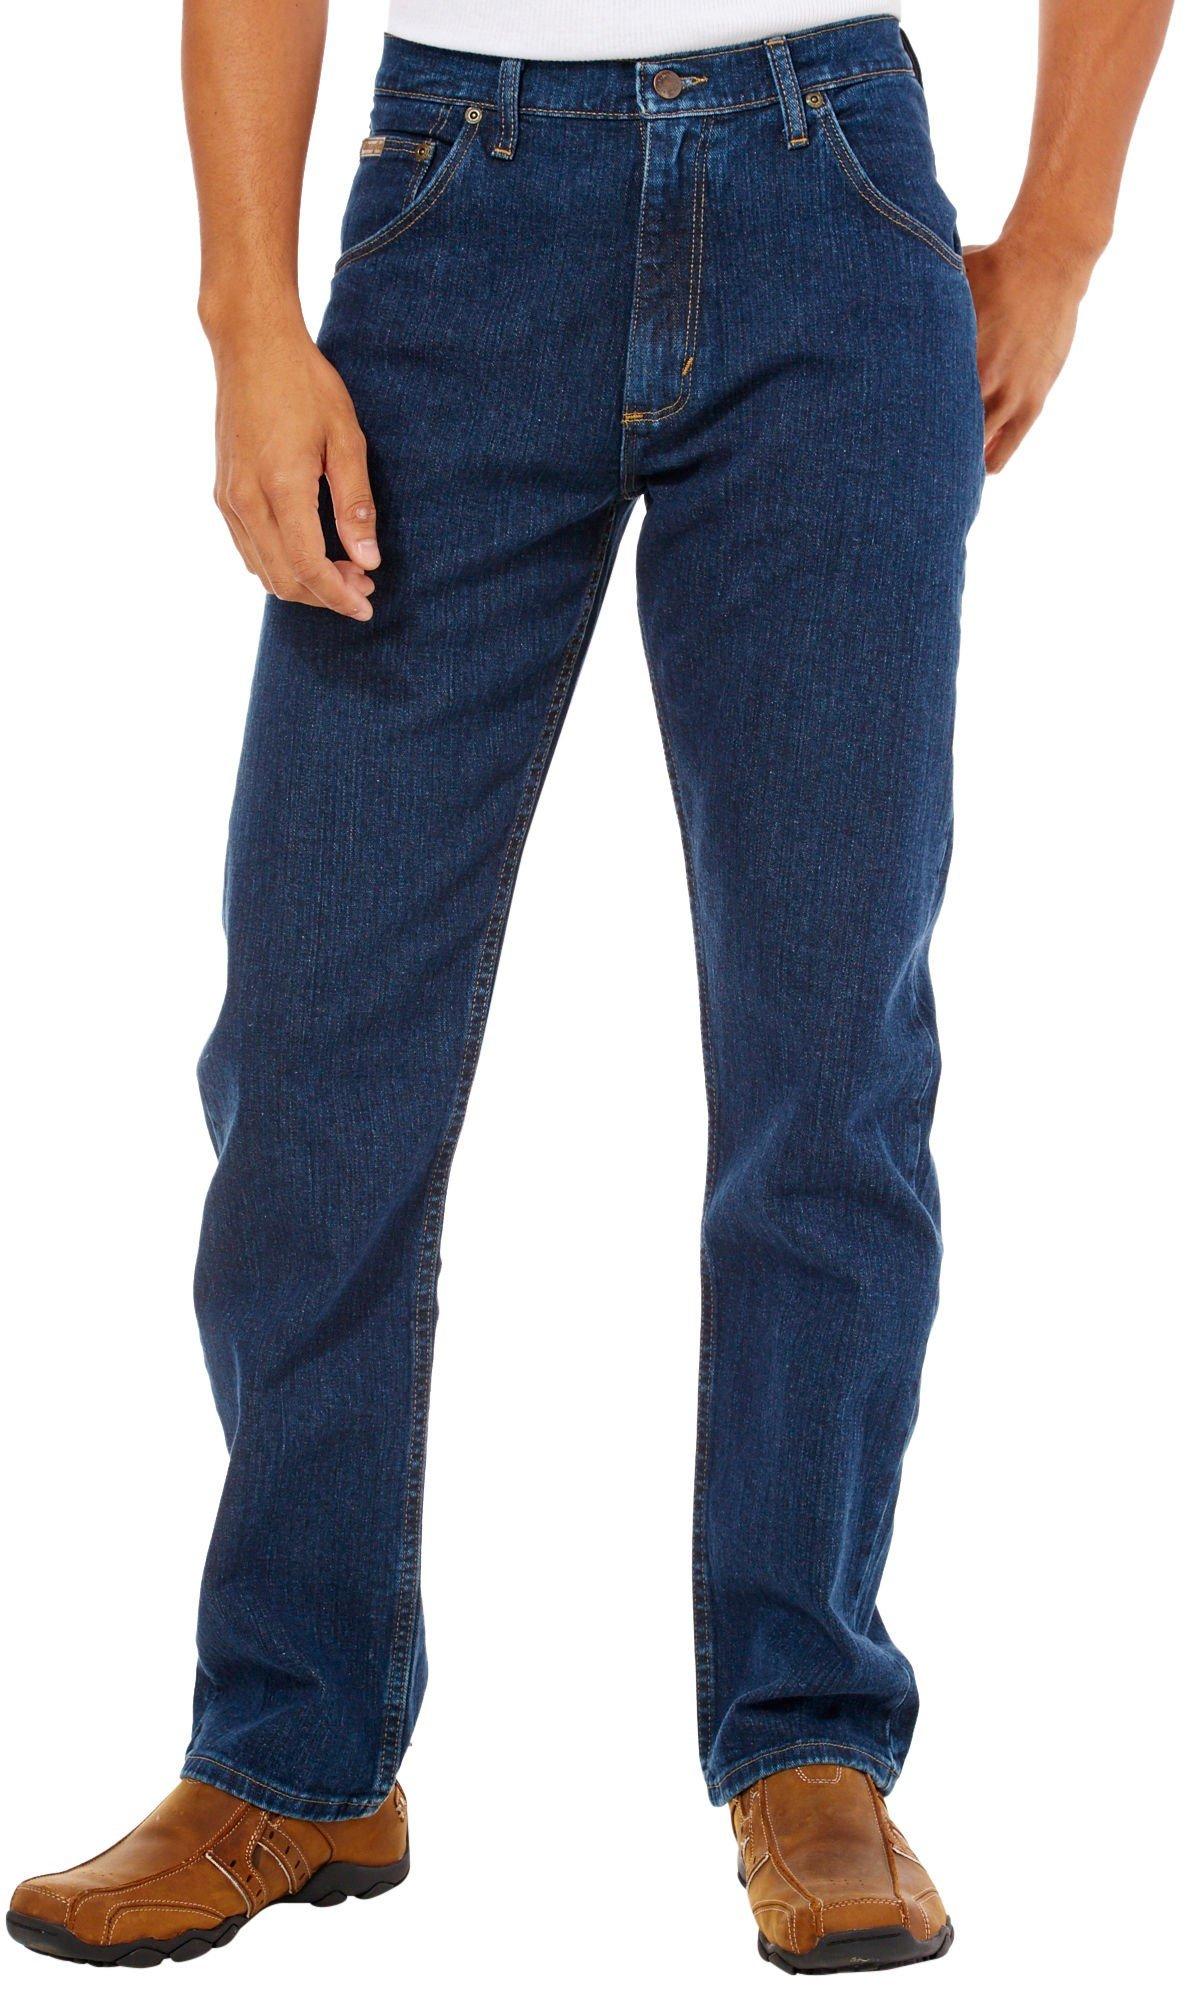 Mens Advanced Comfort Jeans